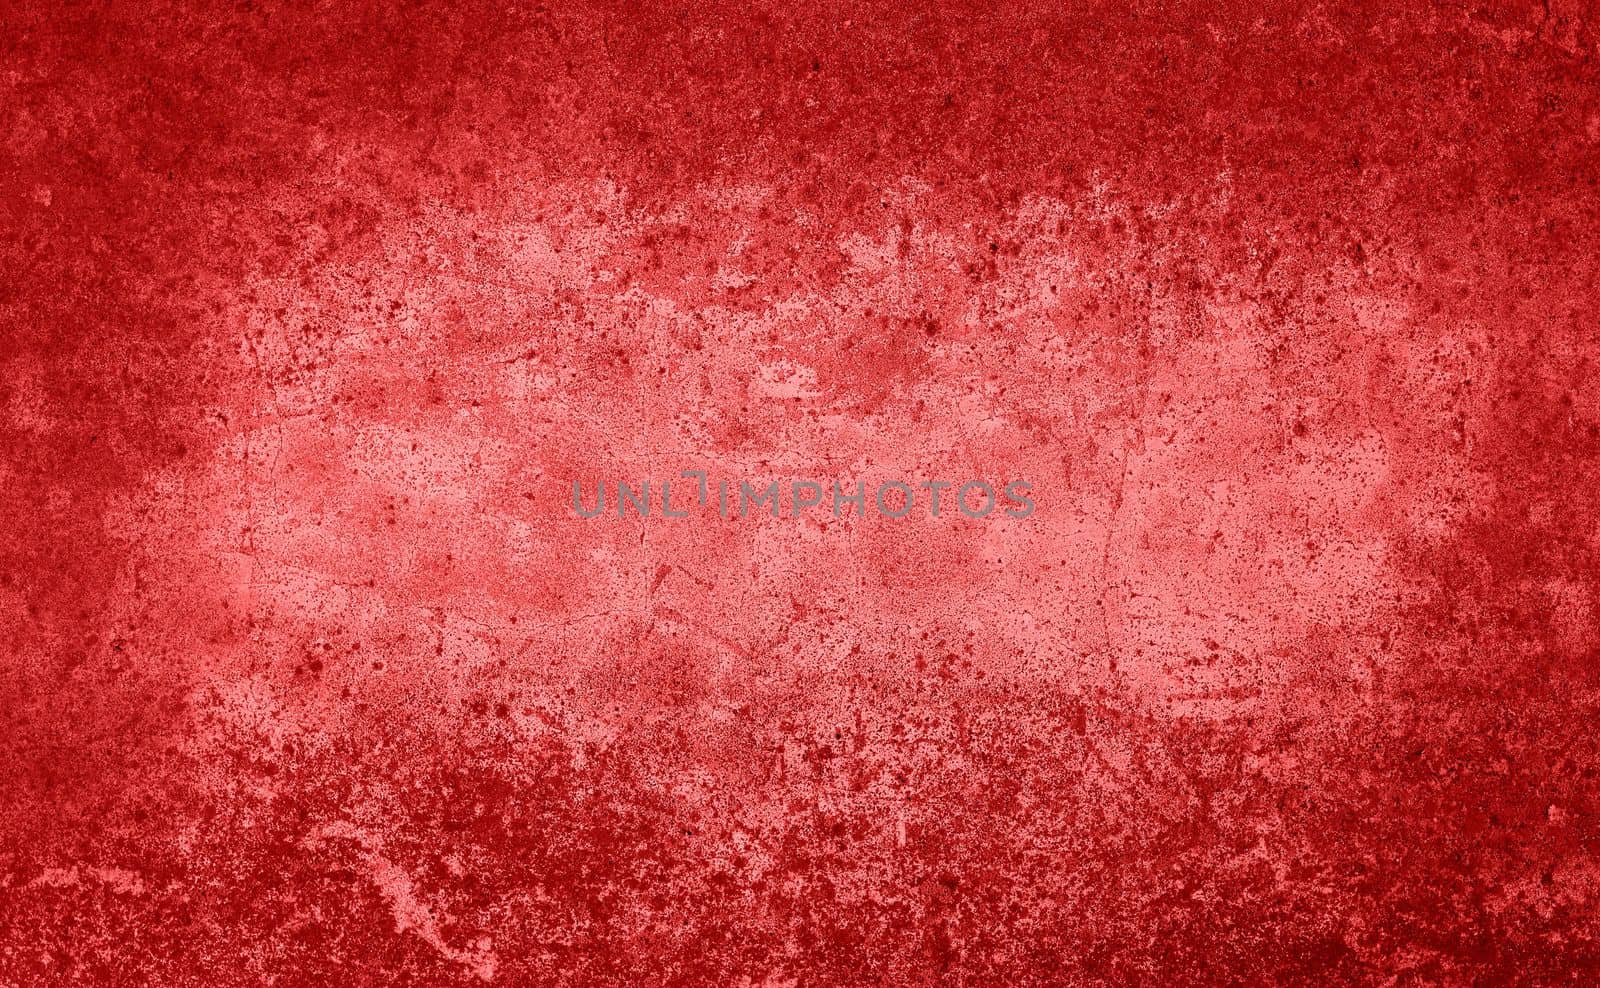 Grunge red stone texture background by BreakingTheWalls